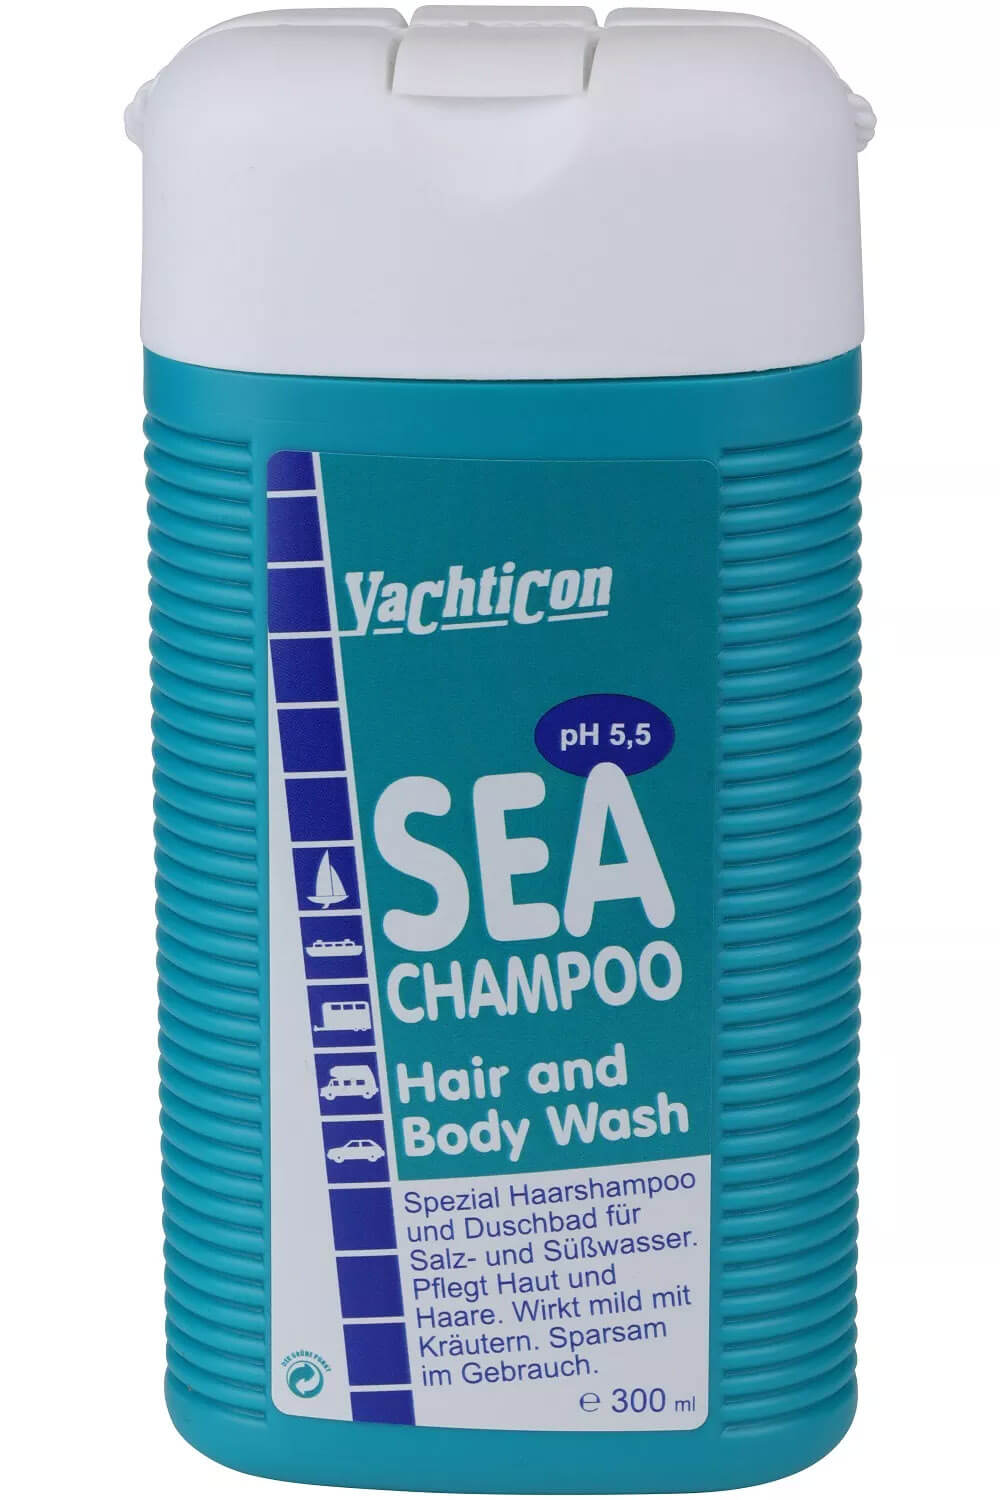 Sea Champoo